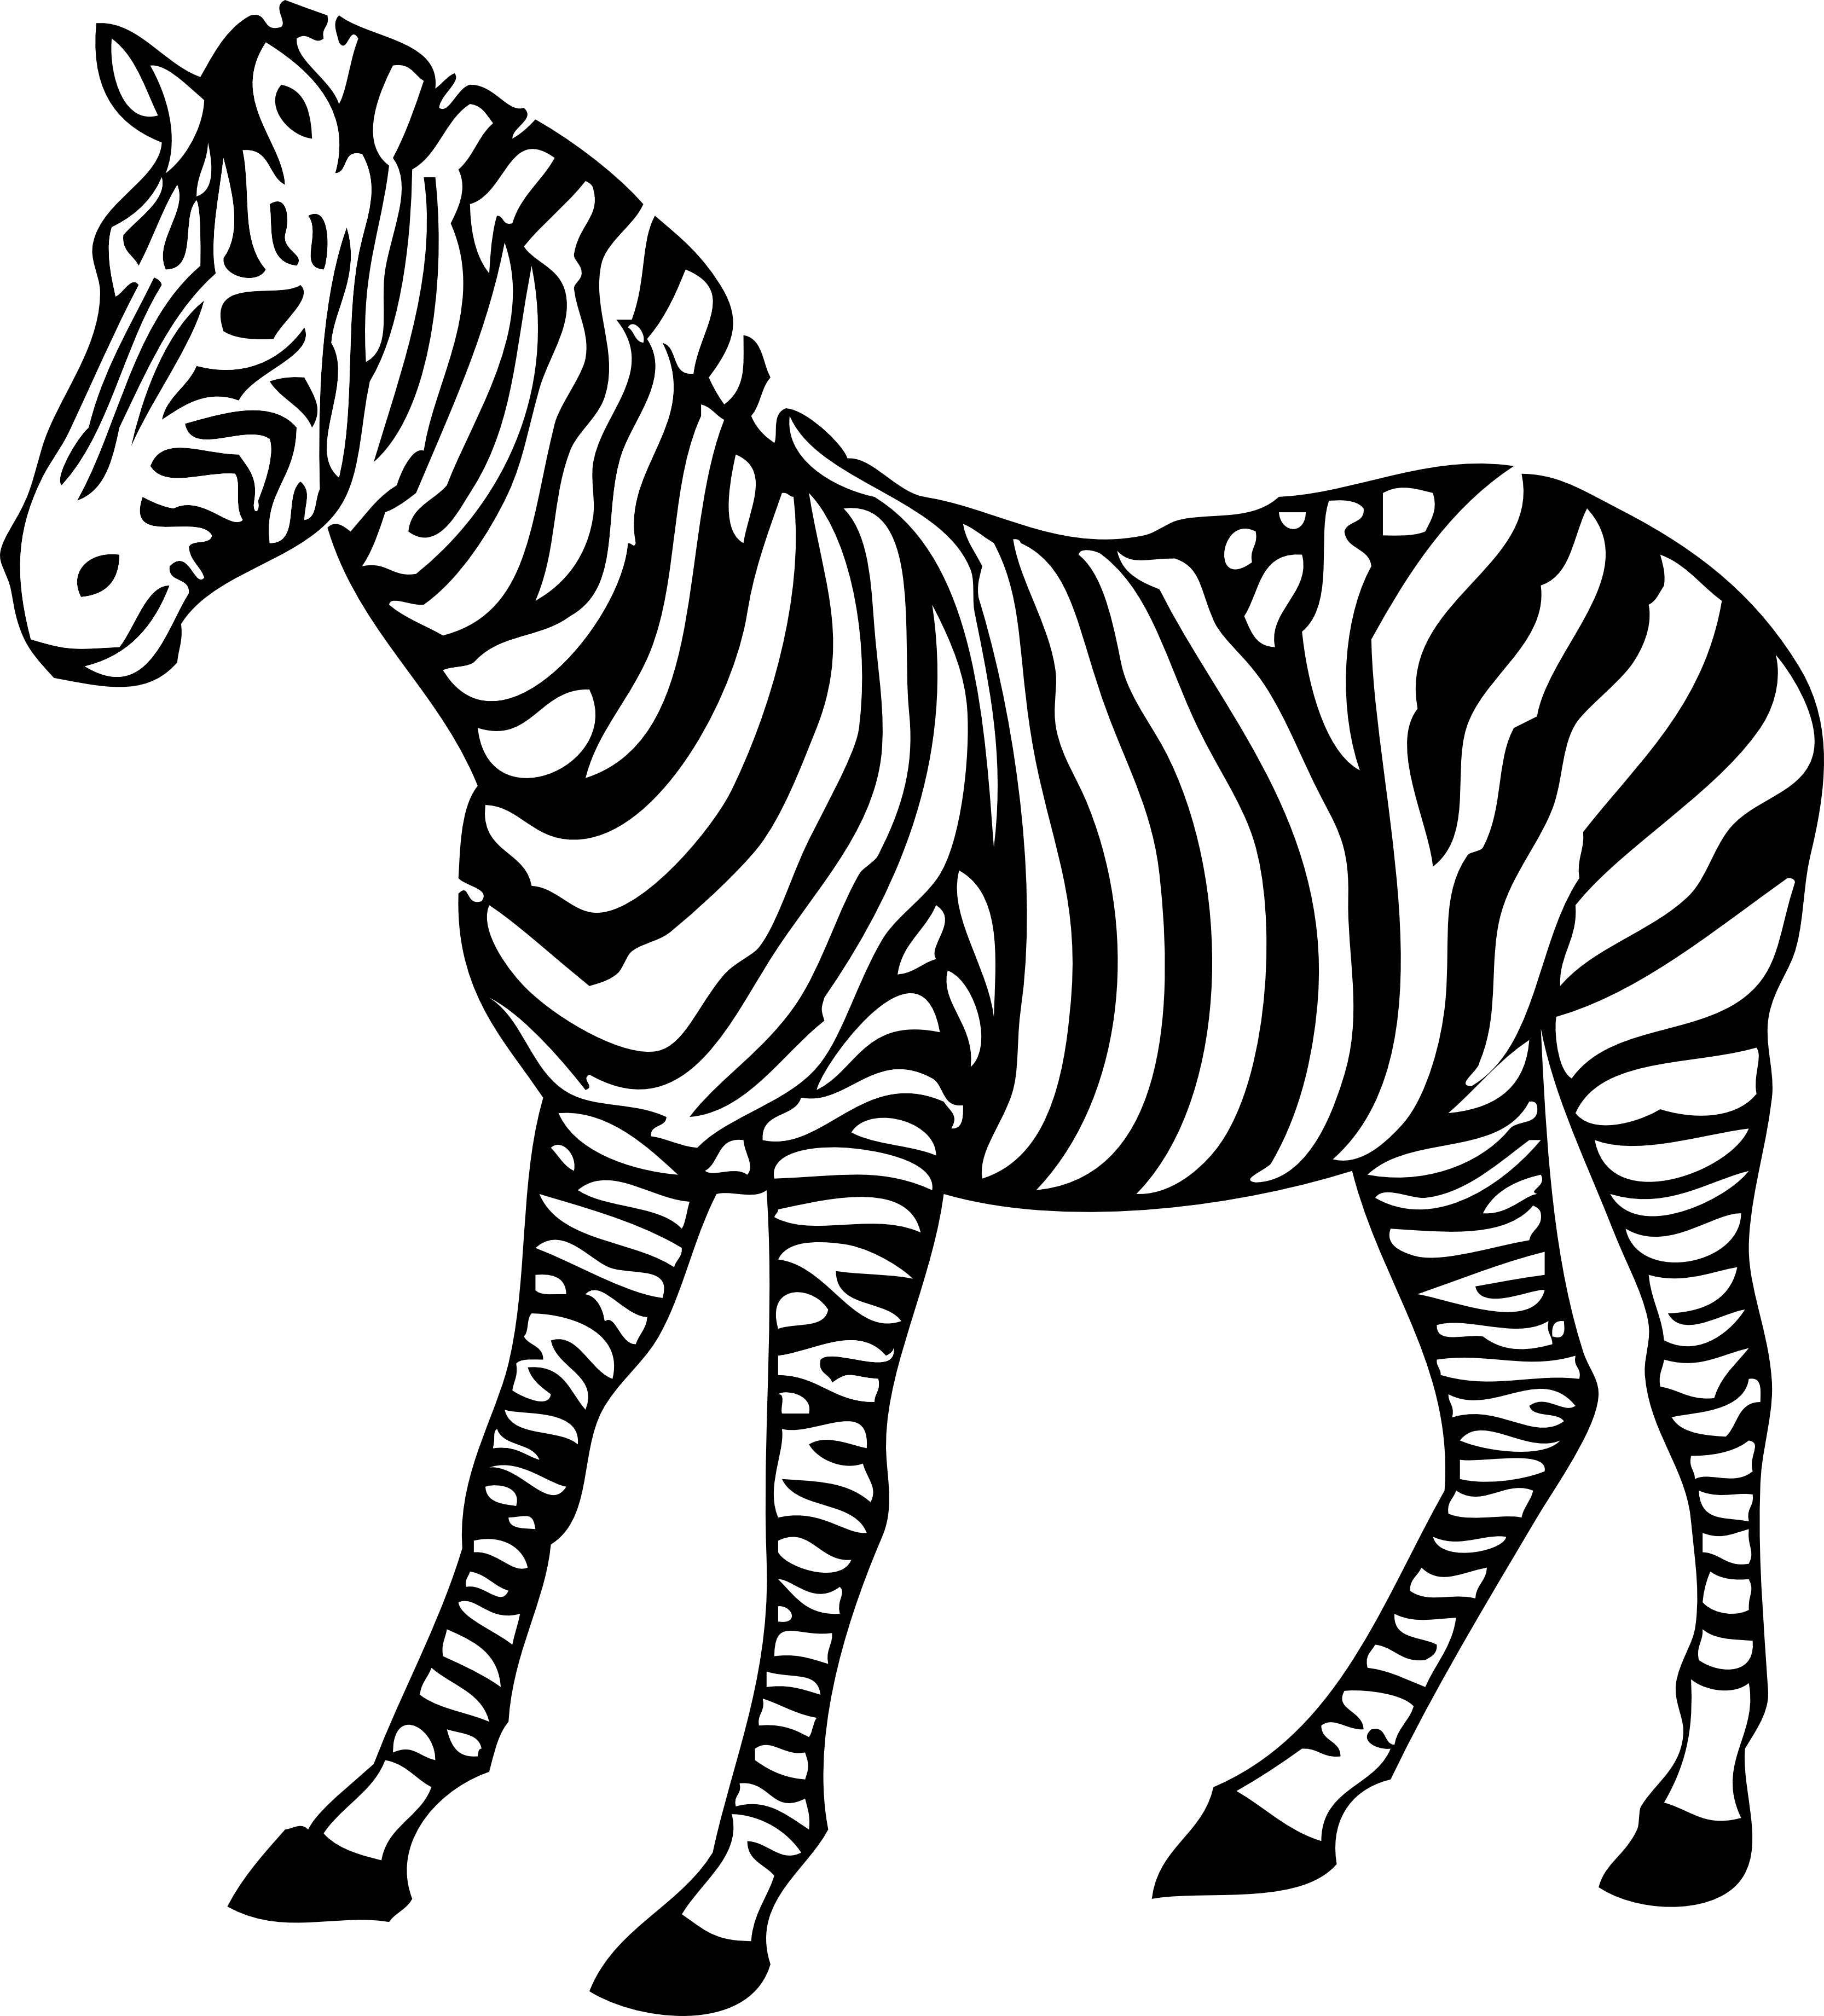 Zebra downloaden Transparentes PNG-Bild